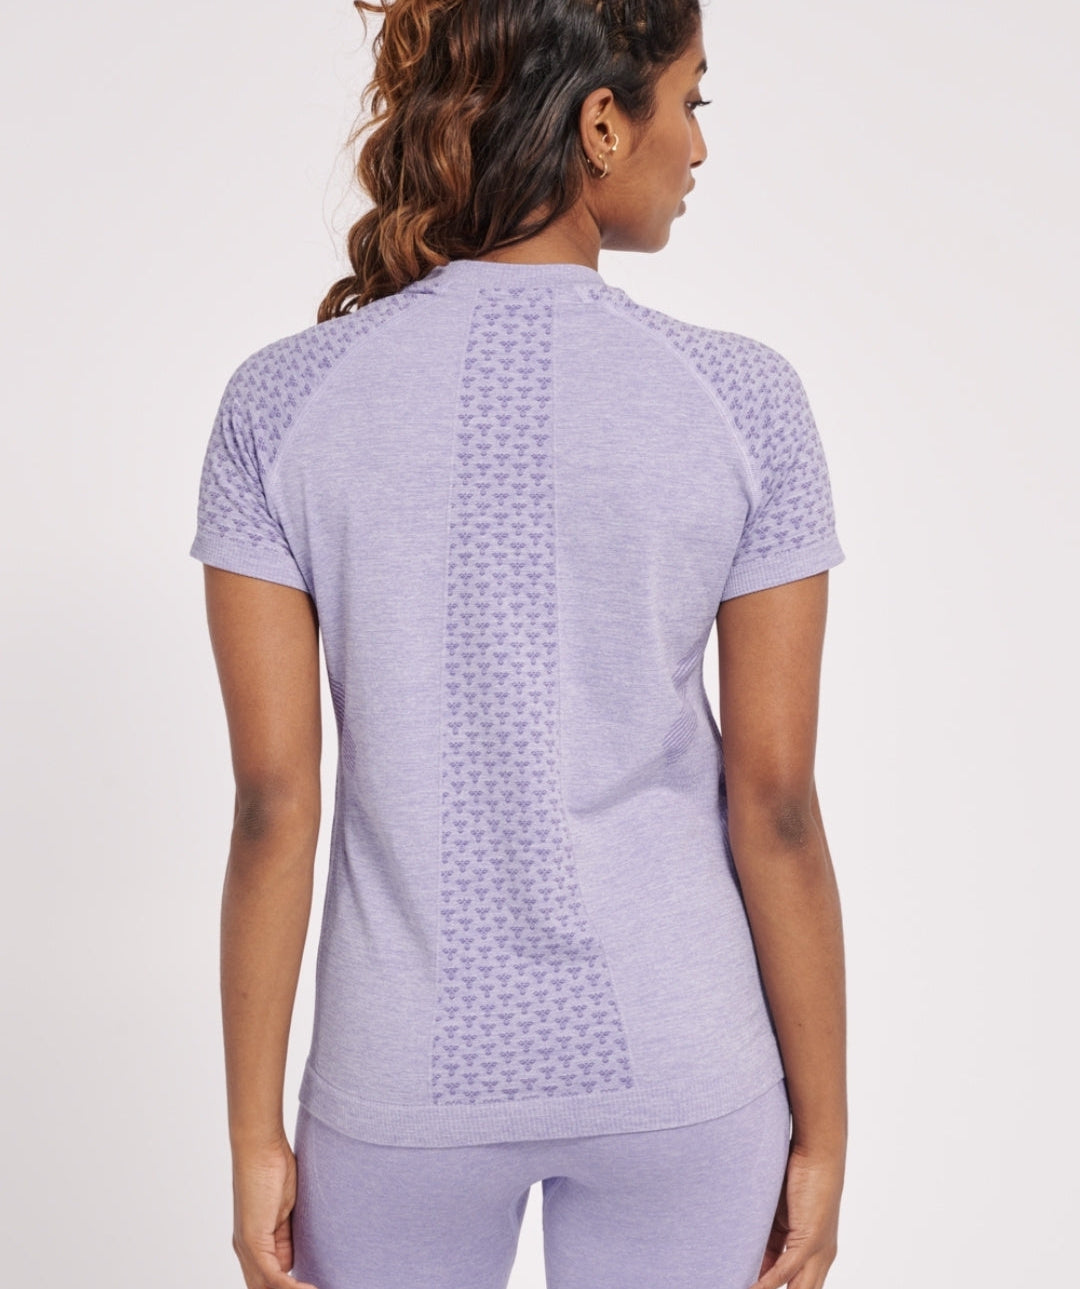 OMBYTNING⎜ T-shirt - Classic (Lavender)⎜GRATIS Hummel® Seamless Bee